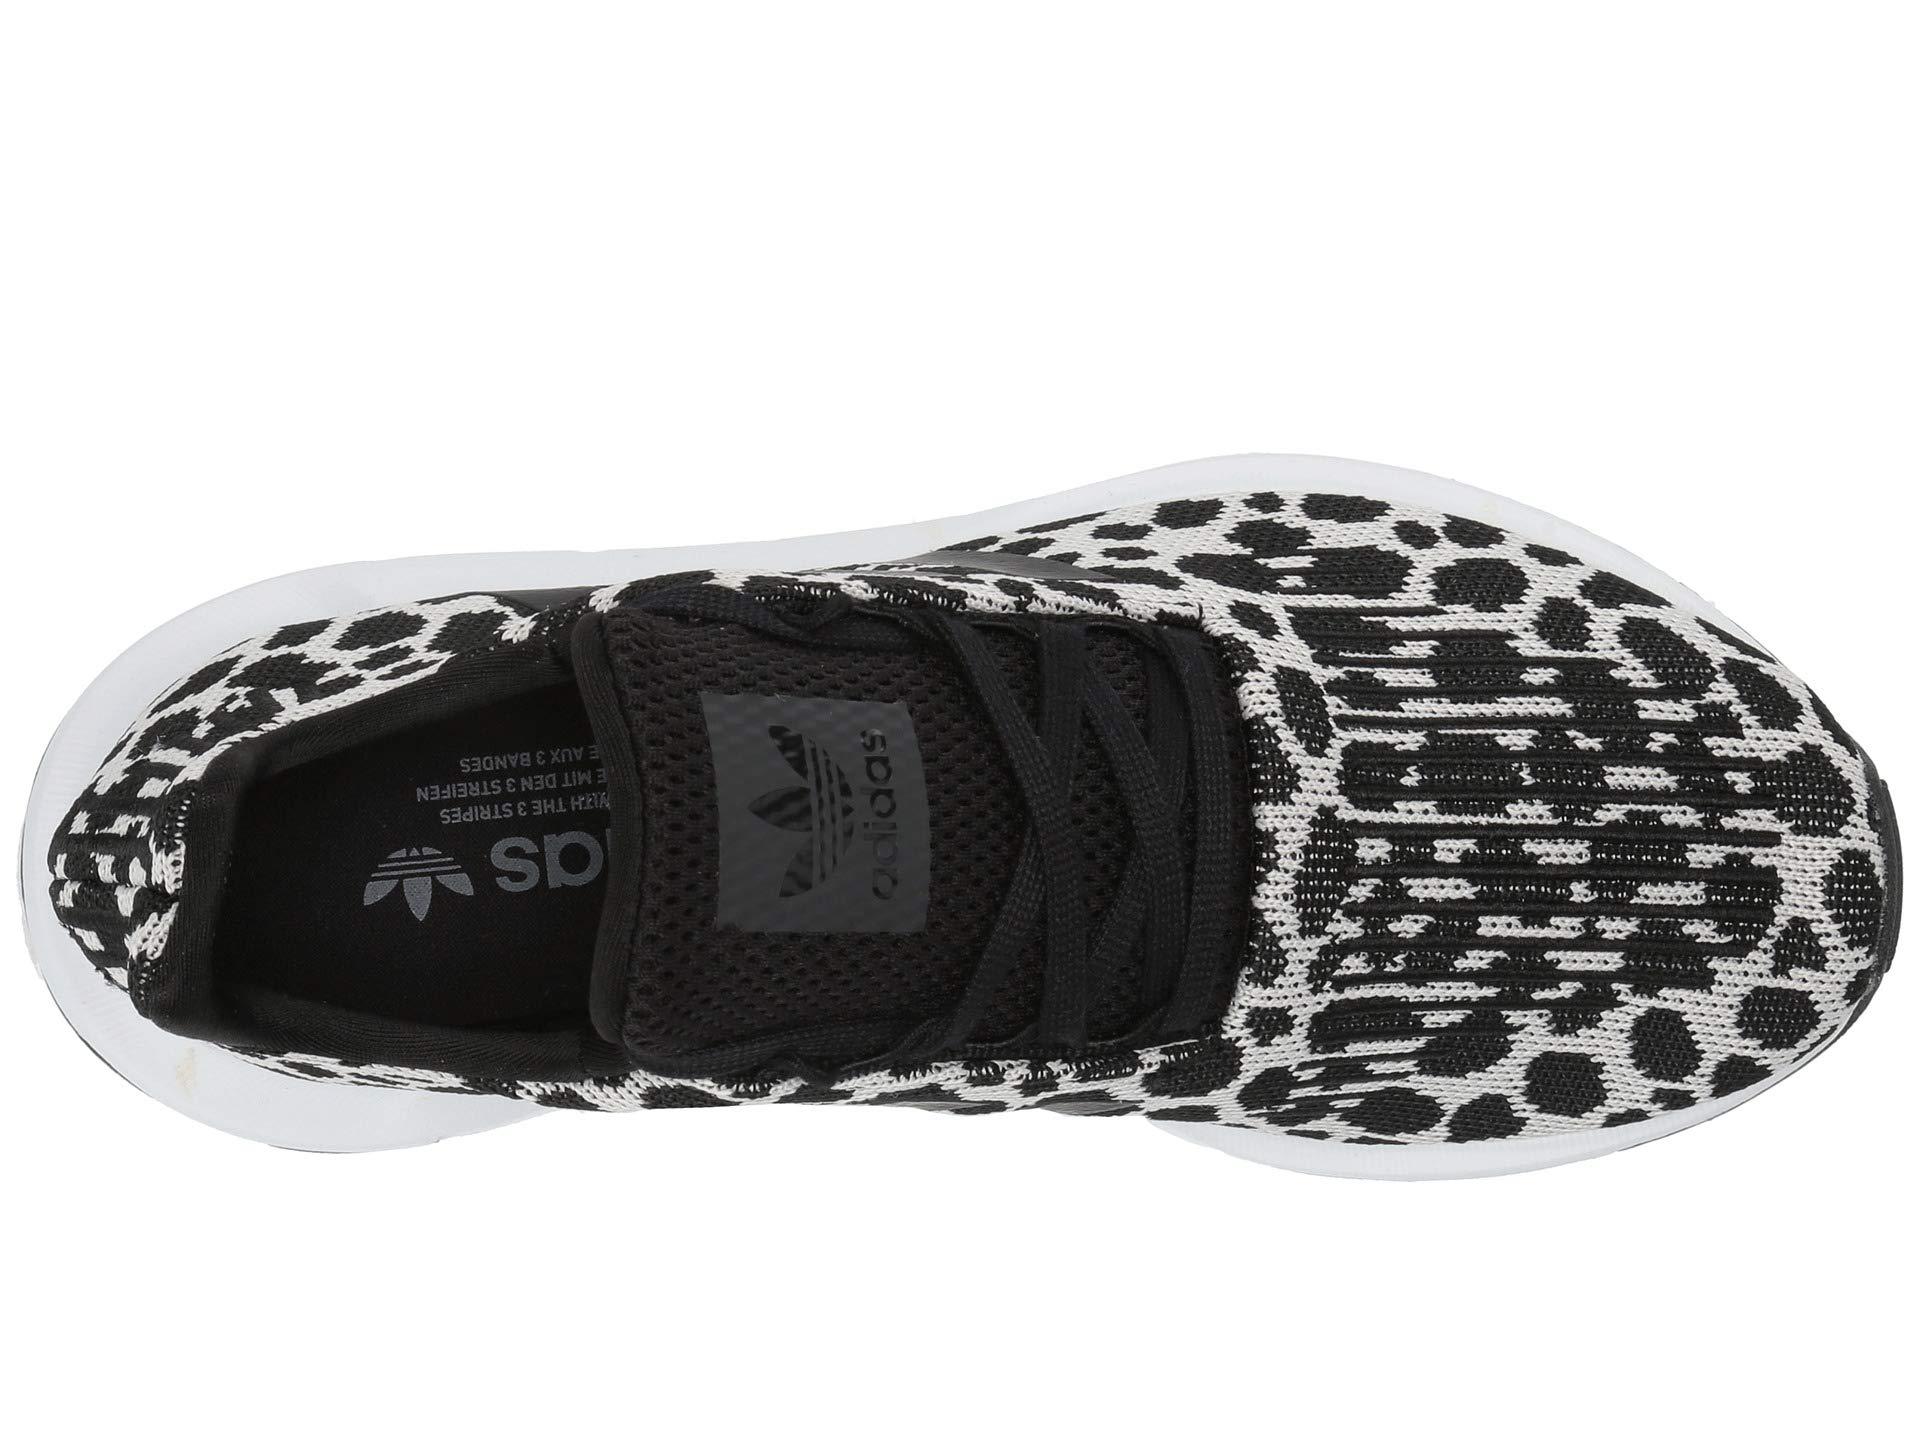 adidas swift run black carbon white